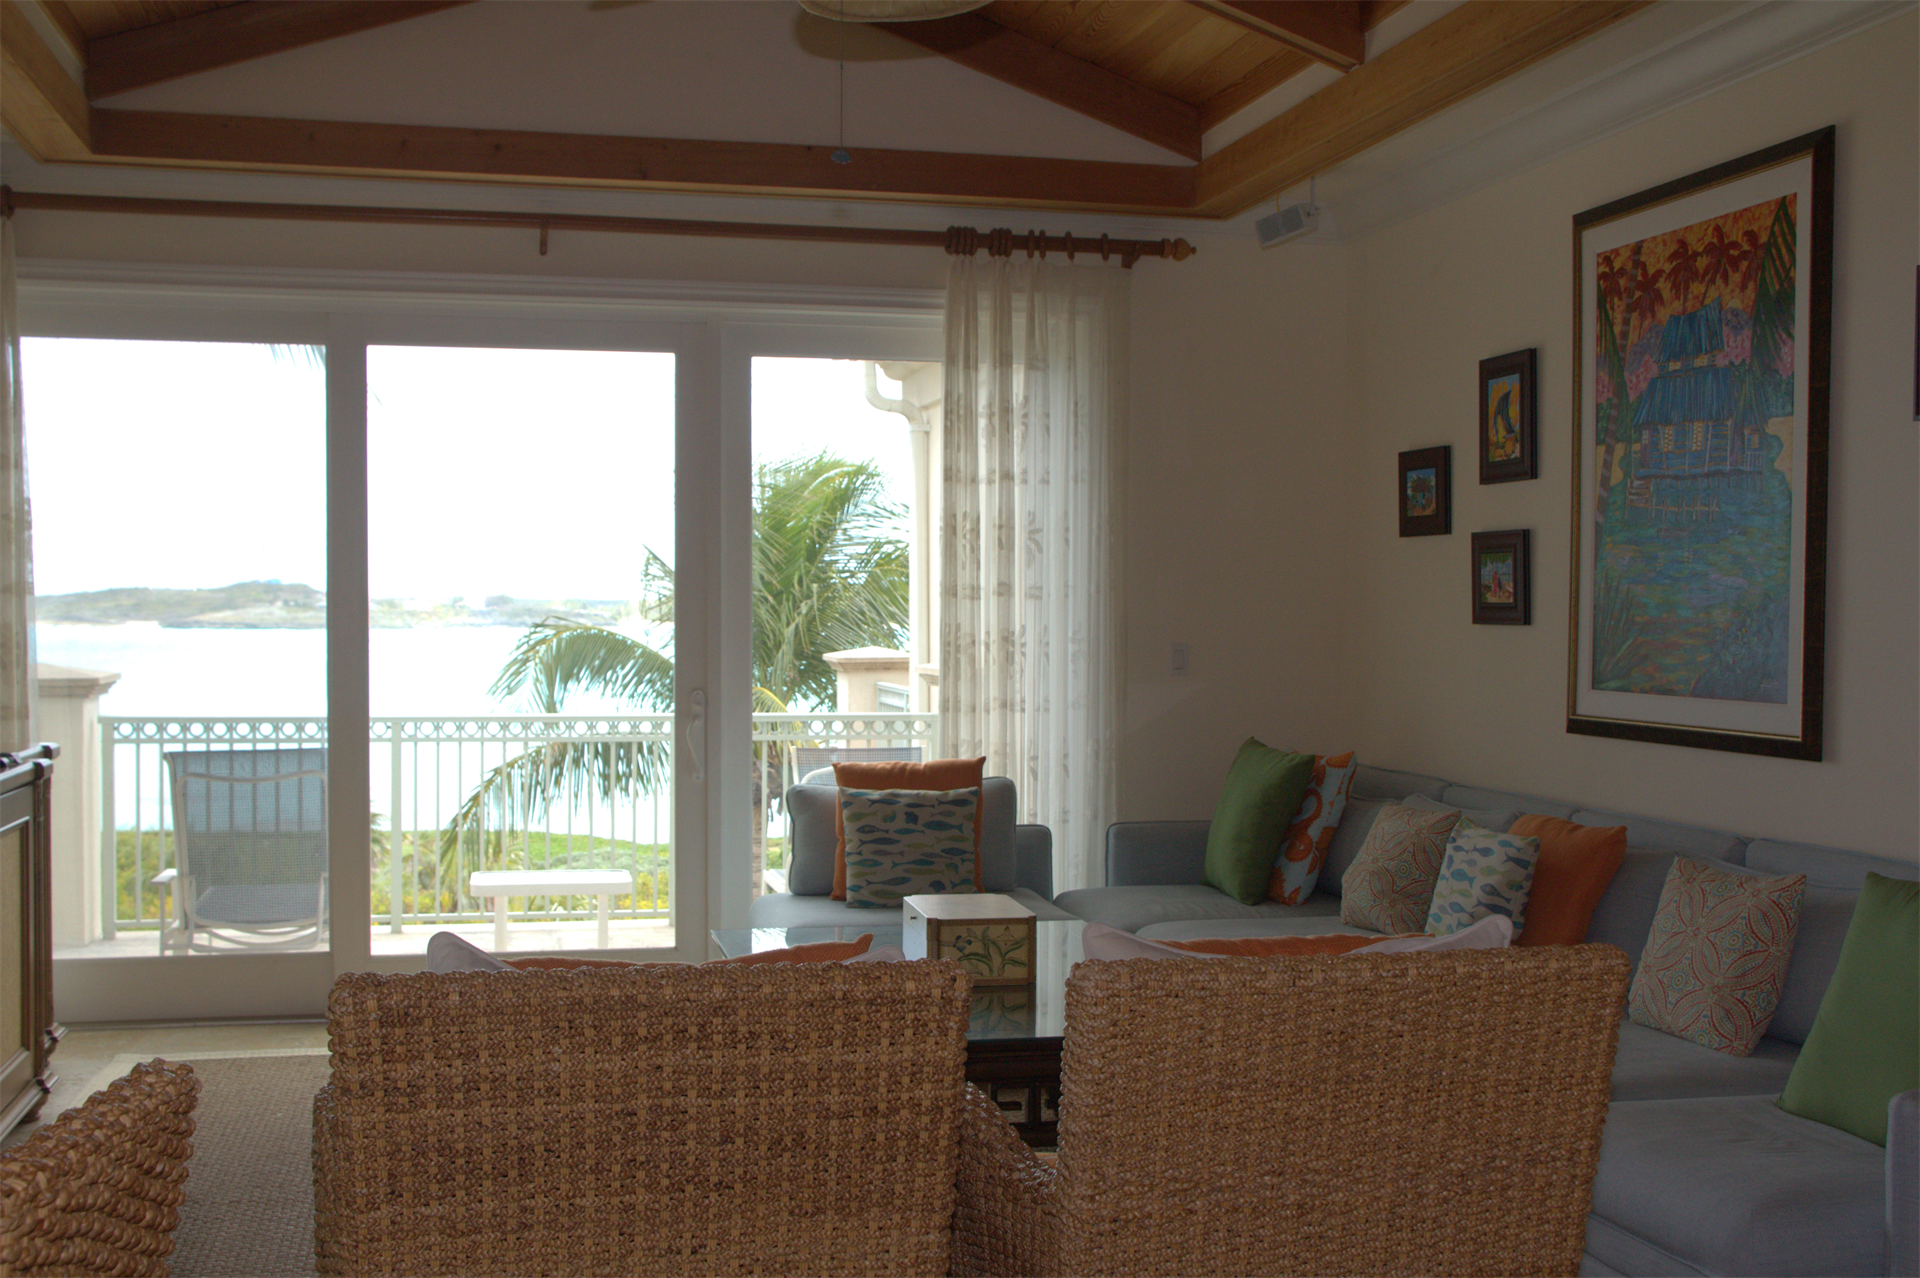 4. Condo / Townhome / Villa for Sale at Emerald Bay, Exuma Bahamas